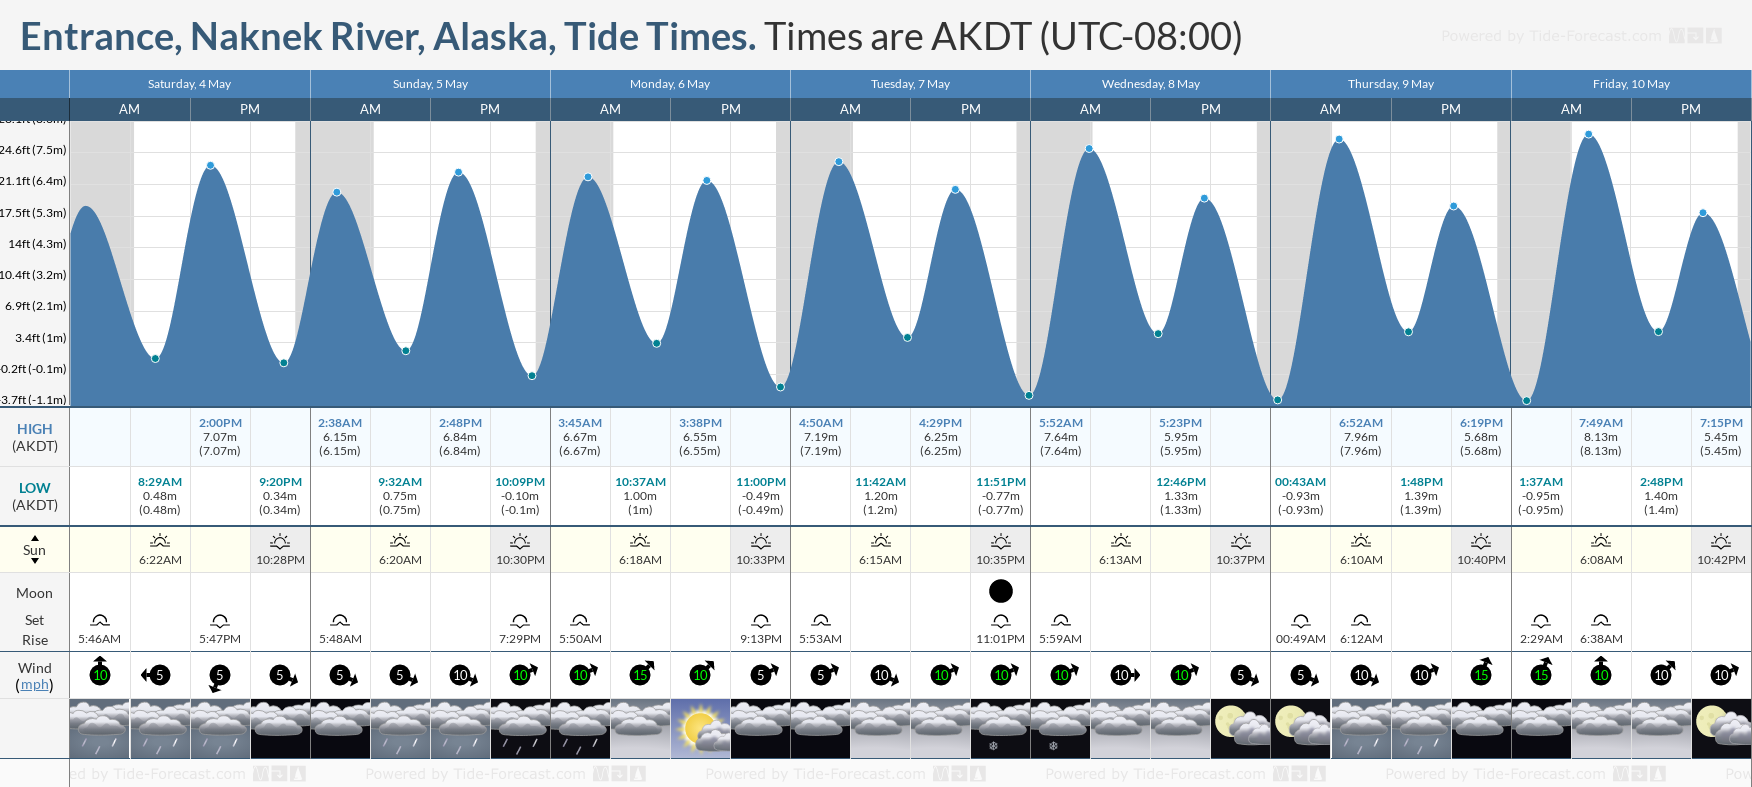 Entrance, Naknek River, Alaska Tide Chart including high and low tide tide times for the next 7 days